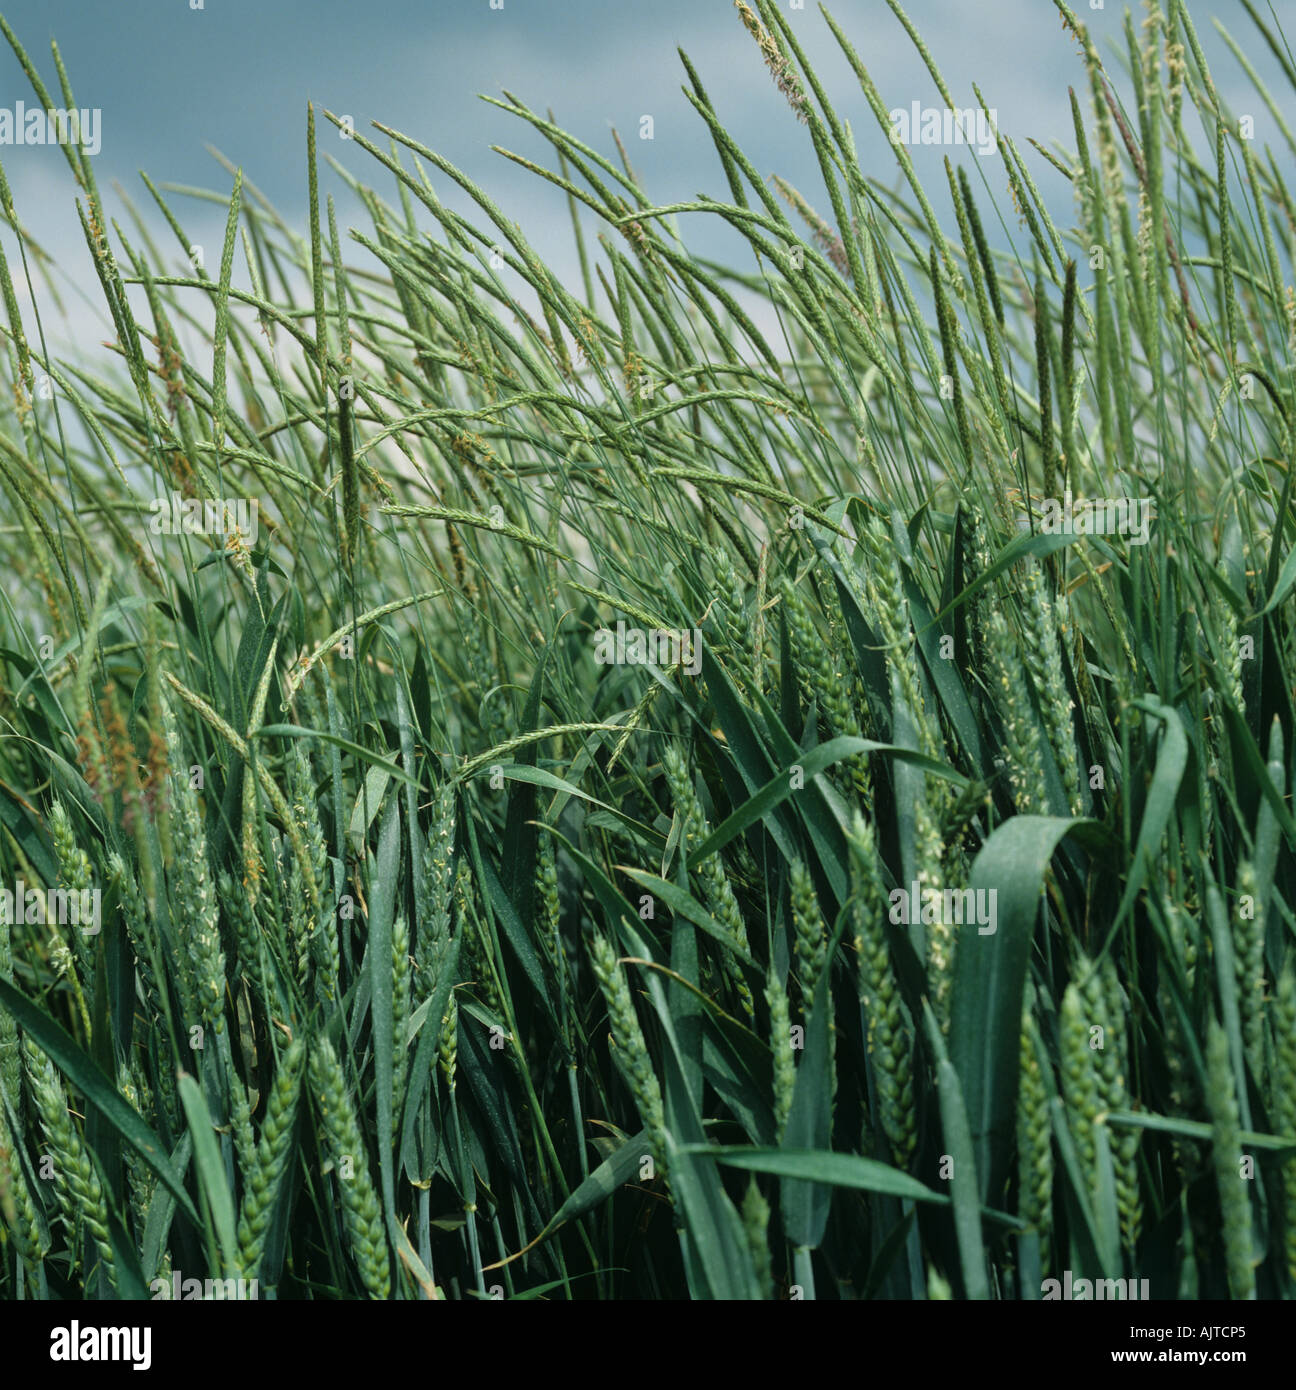 Blackgrass Alopecurus myosuroides flowering in a wheat crop in ear ...